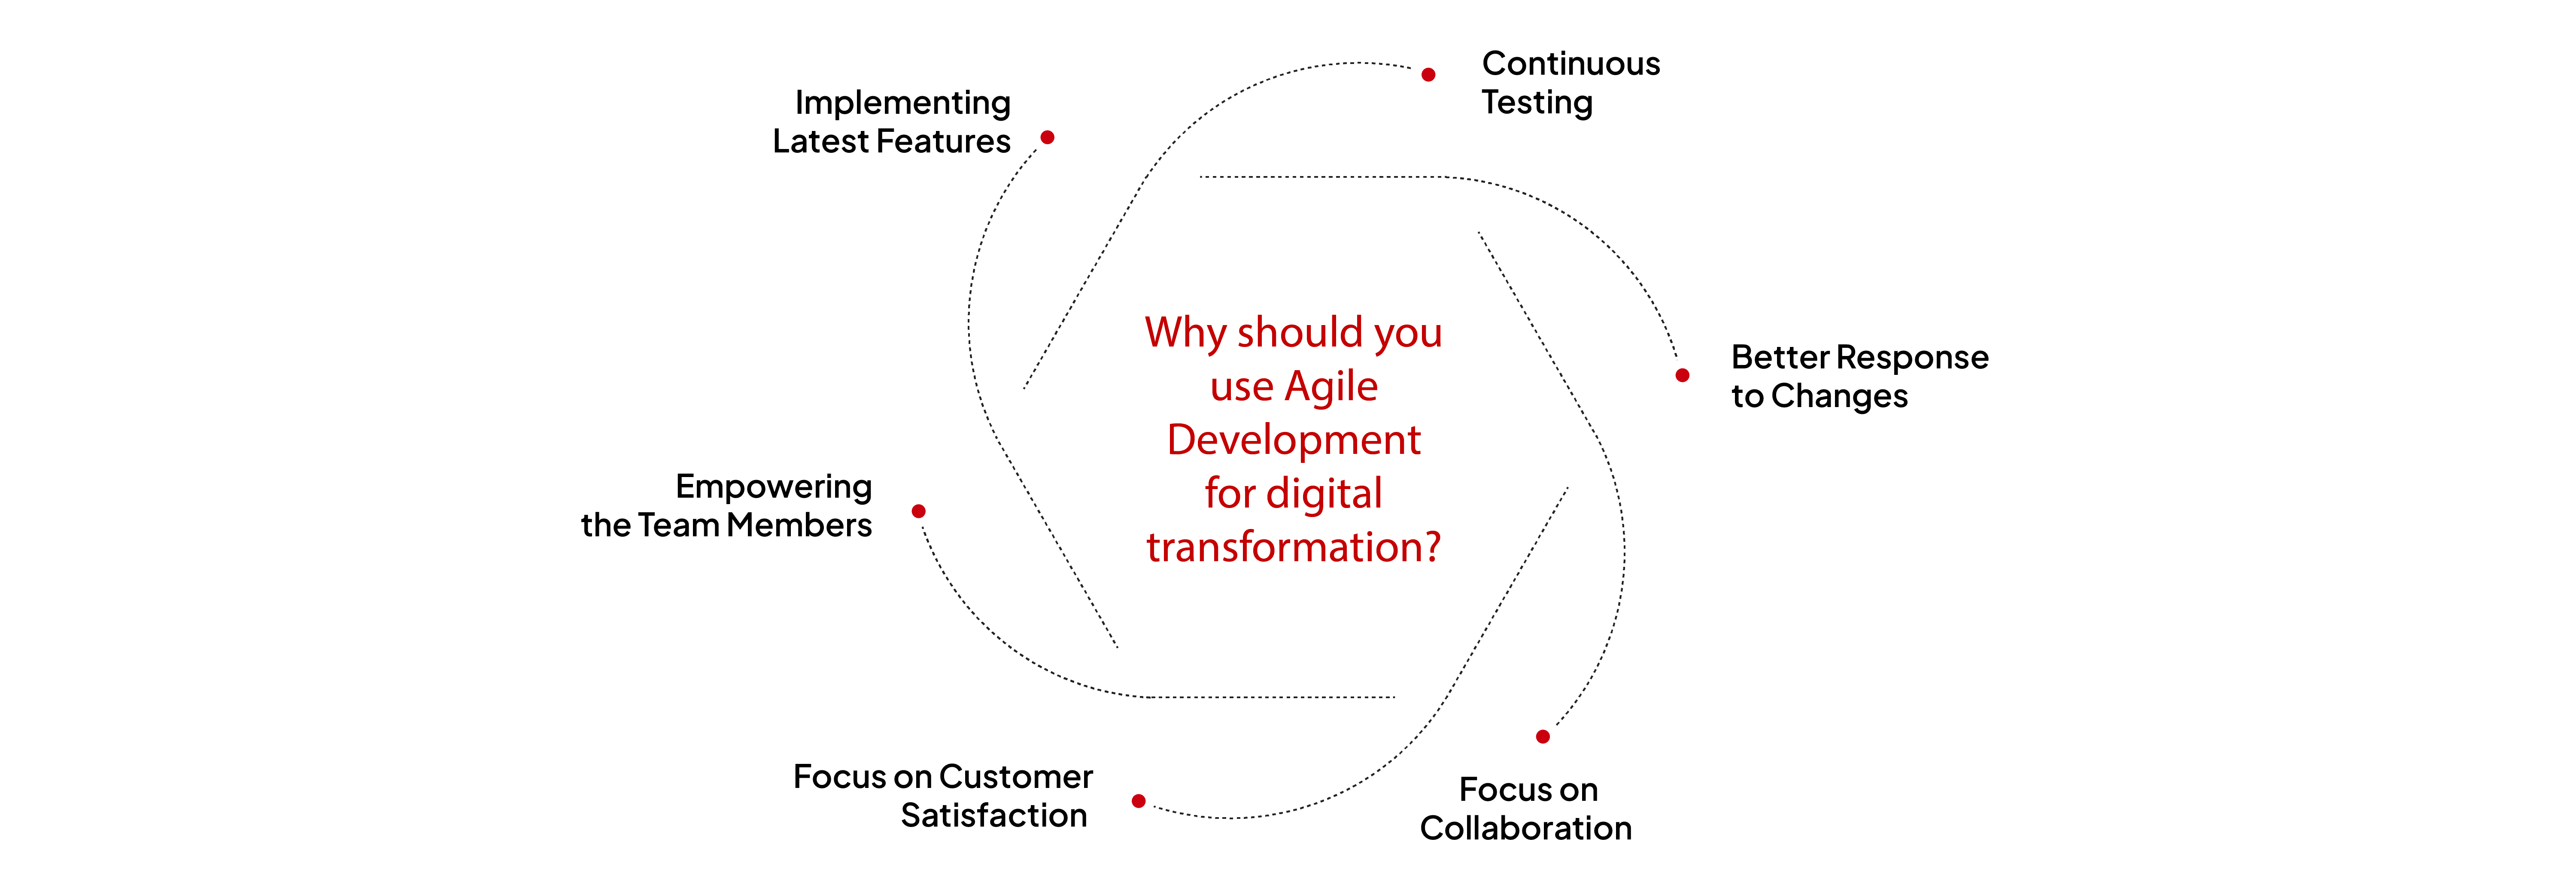 Use of Agile Development for Digital Transformation